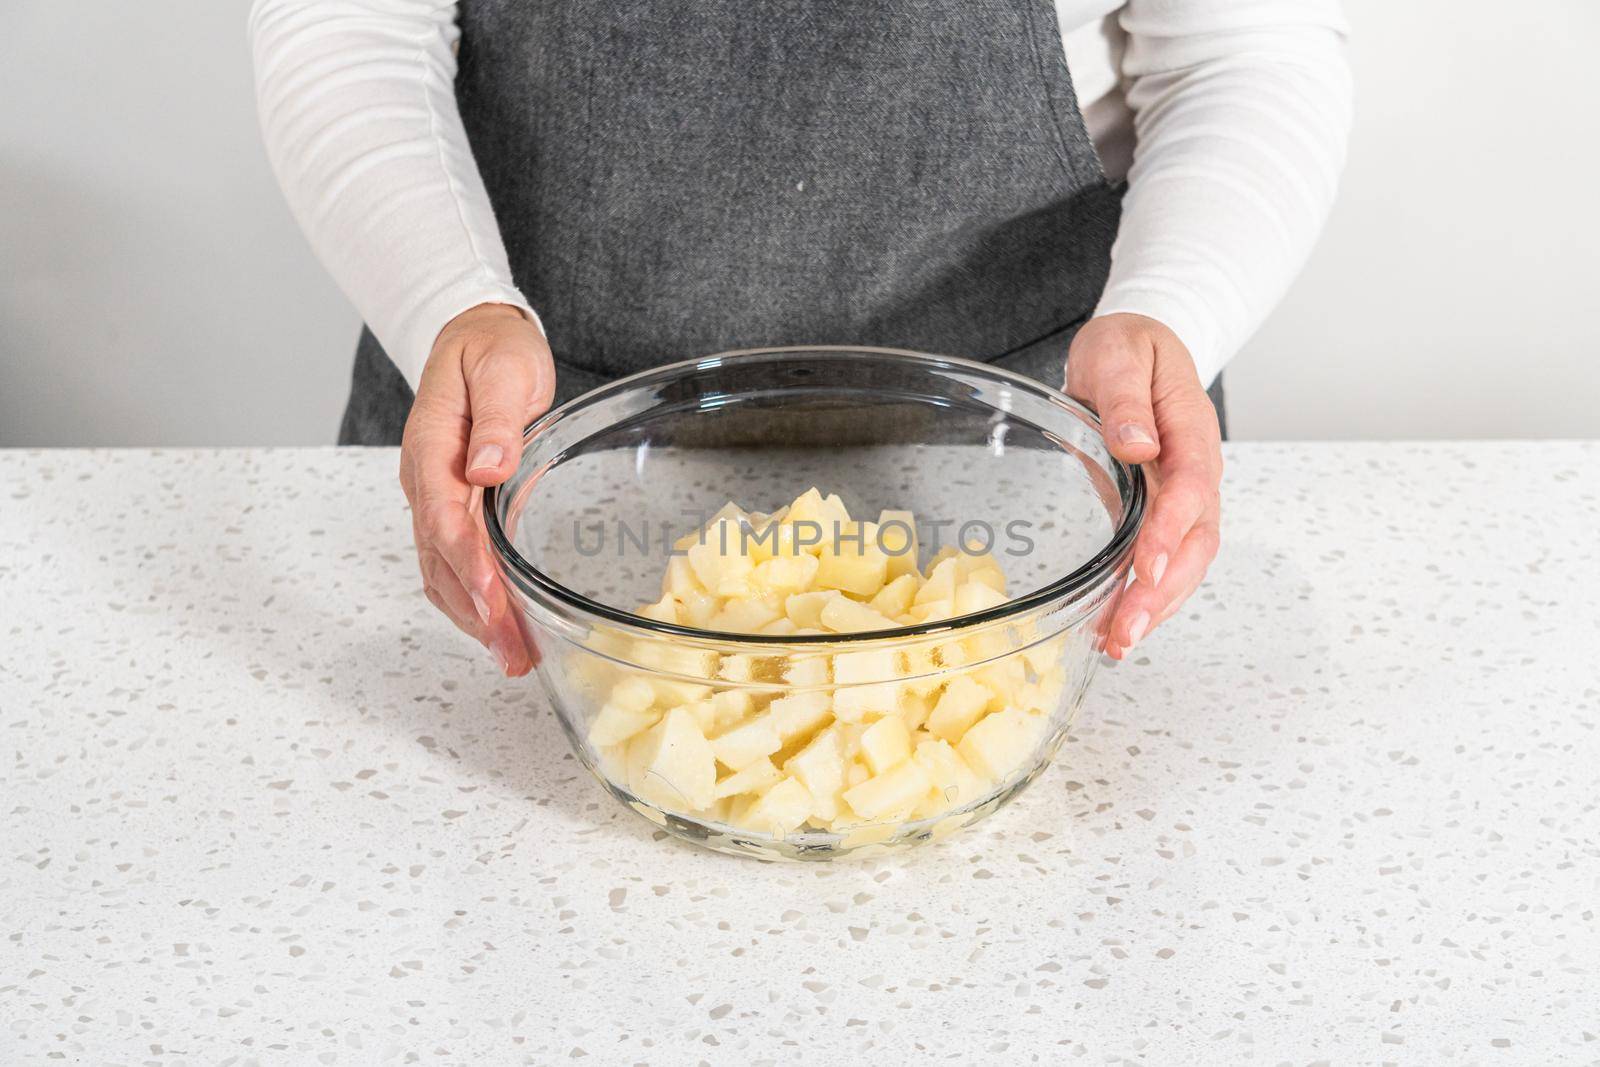 Mixing ingredients in a large glass mixing bowl to make potato salad.